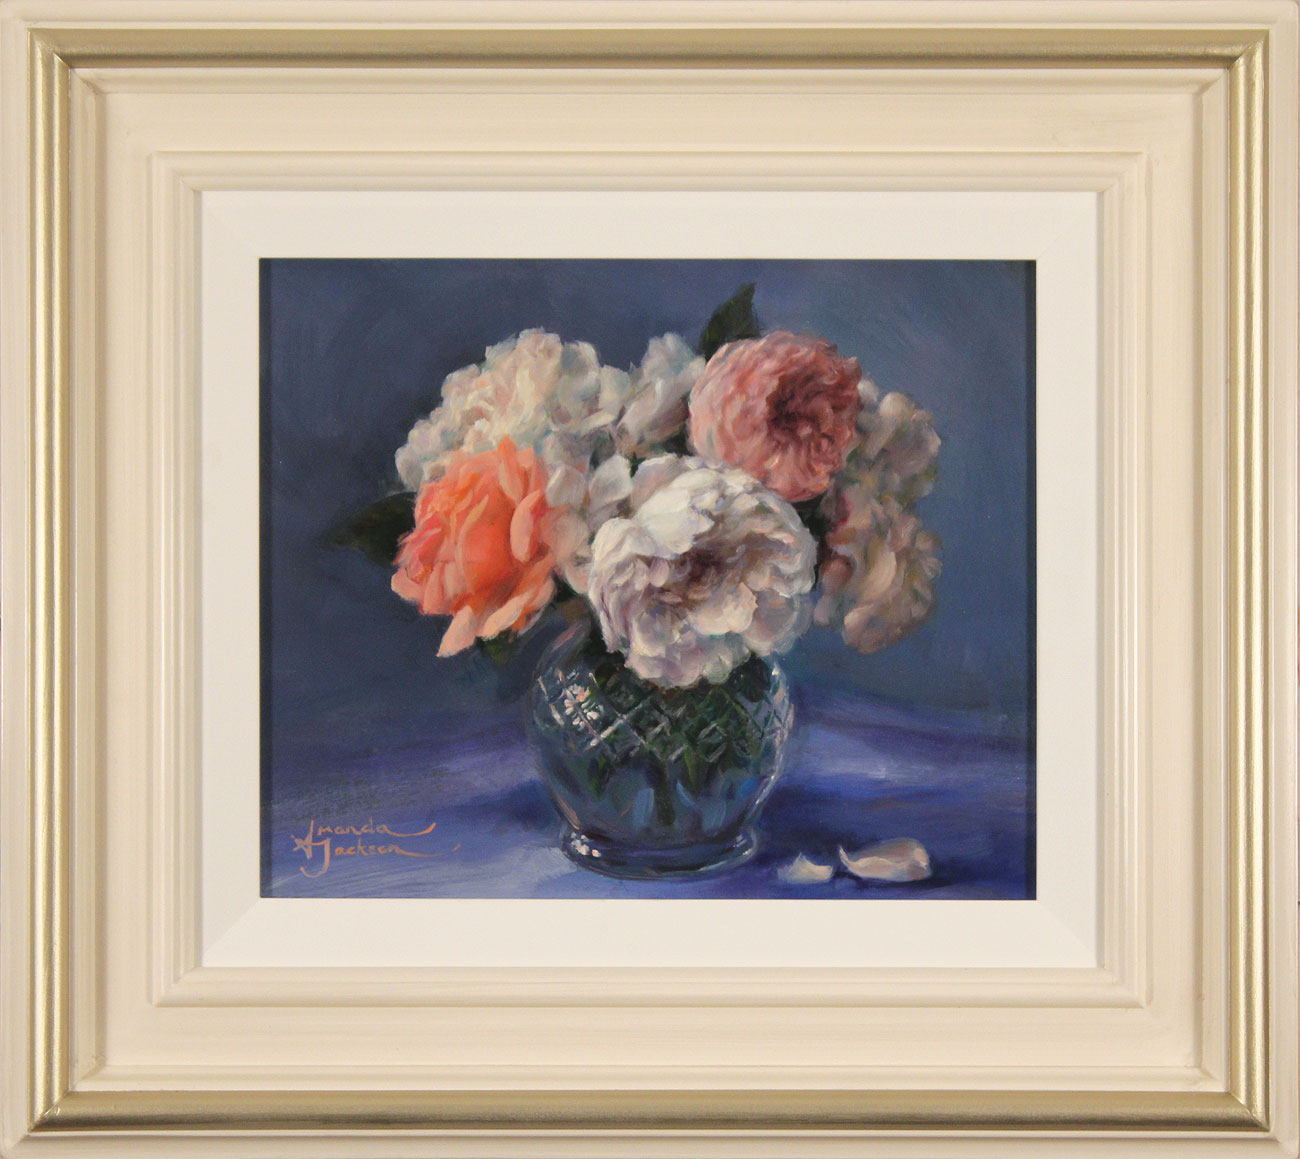 Amanda Jackson, Original oil painting on panel, Garden Roses